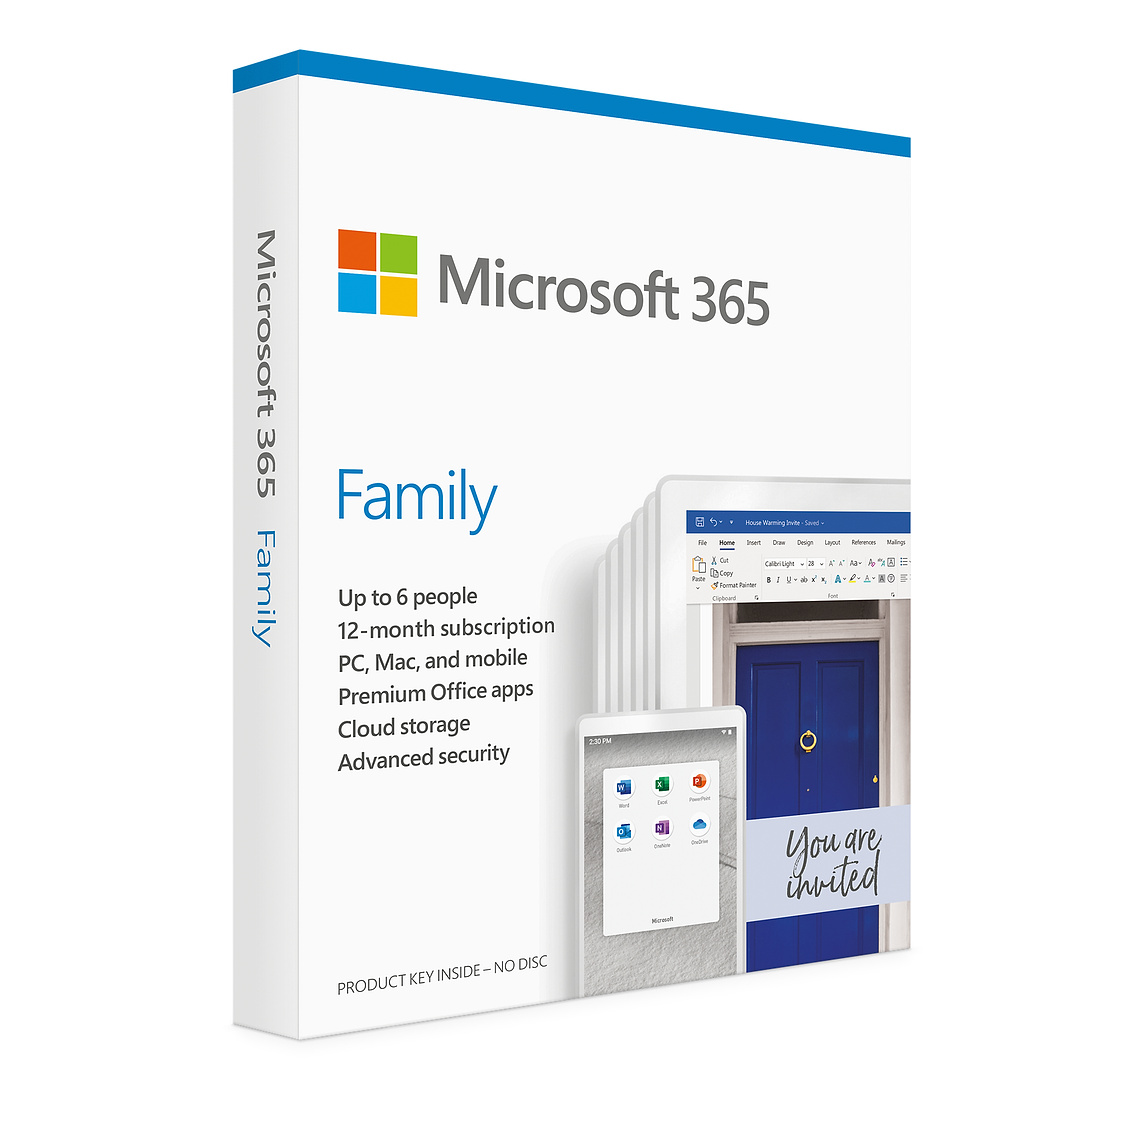 Microsoft 365 Family.jpg